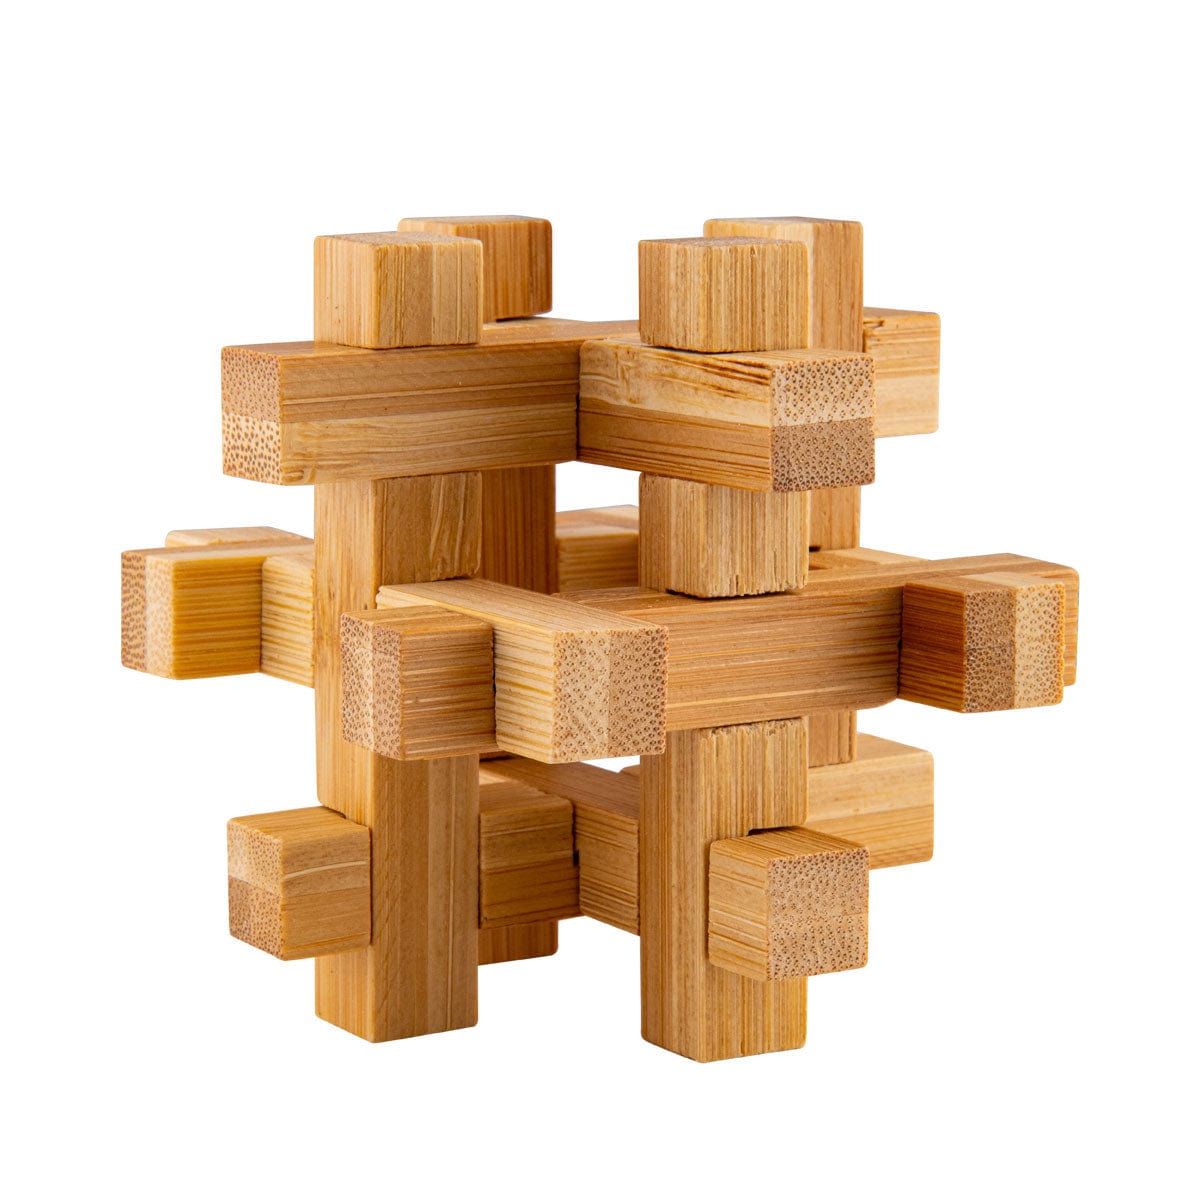 Relaxus Wholesale Eco Bamboo Puzzles